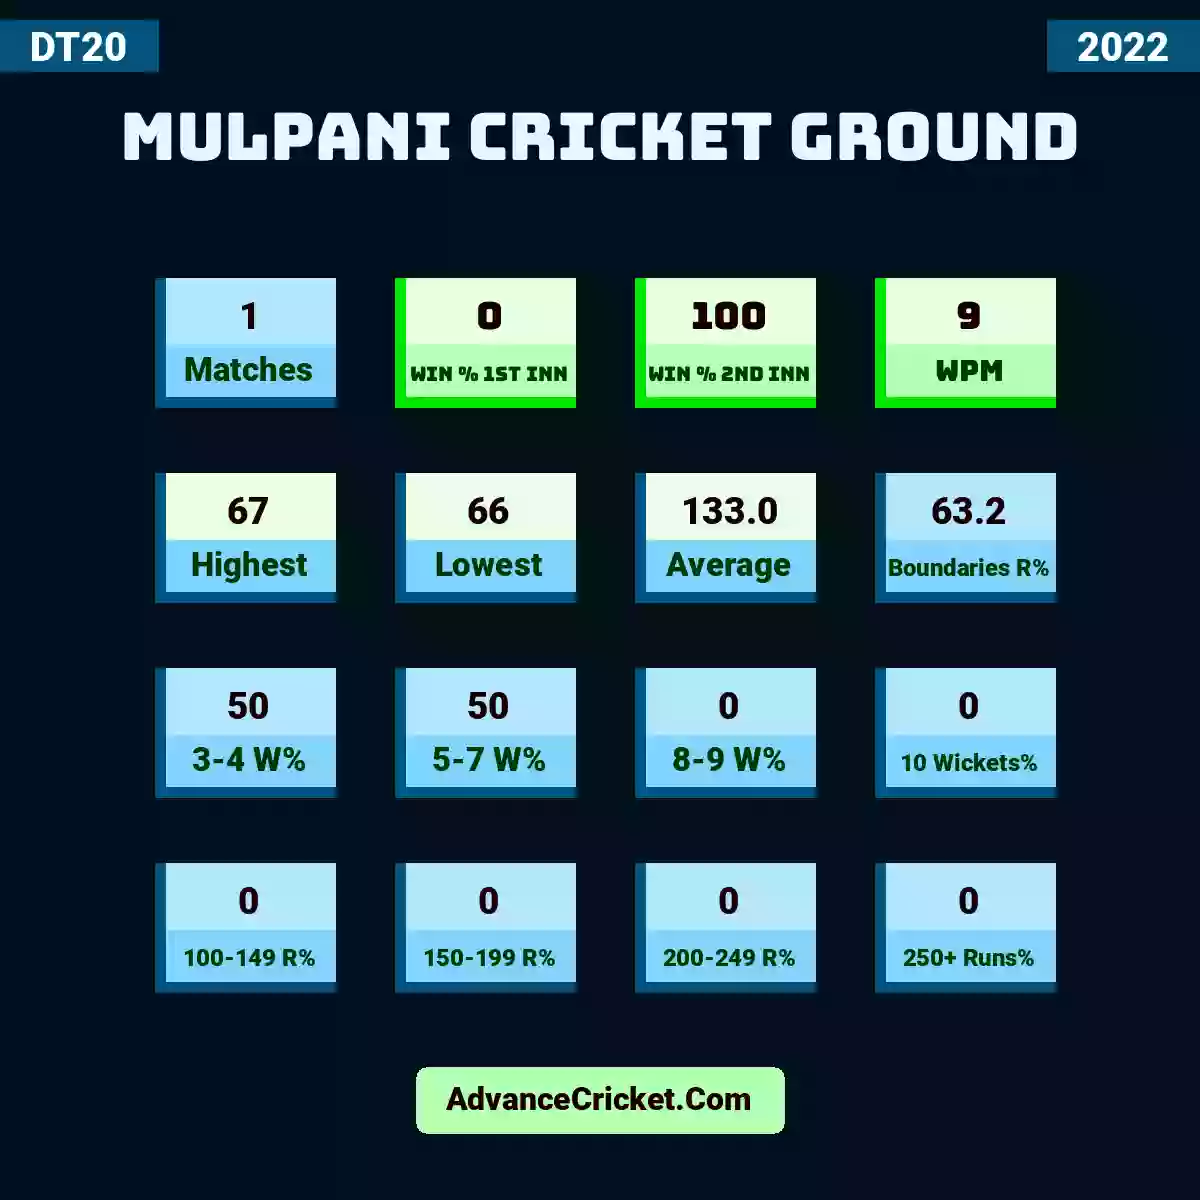 Image showing Mulpani Cricket Ground with Matches: 1, Win % 1st Inn: 0, Win % 2nd Inn: 100, WPM: 9, Highest: 67, Lowest: 66, Average: 133.0, Boundaries R%: 63.2, 3-4 W%: 50, 5-7 W%: 50, 8-9 W%: 0, 10 Wickets%: 0, 100-149 R%: 0, 150-199 R%: 0, 200-249 R%: 0, 250+ Runs%: 0.